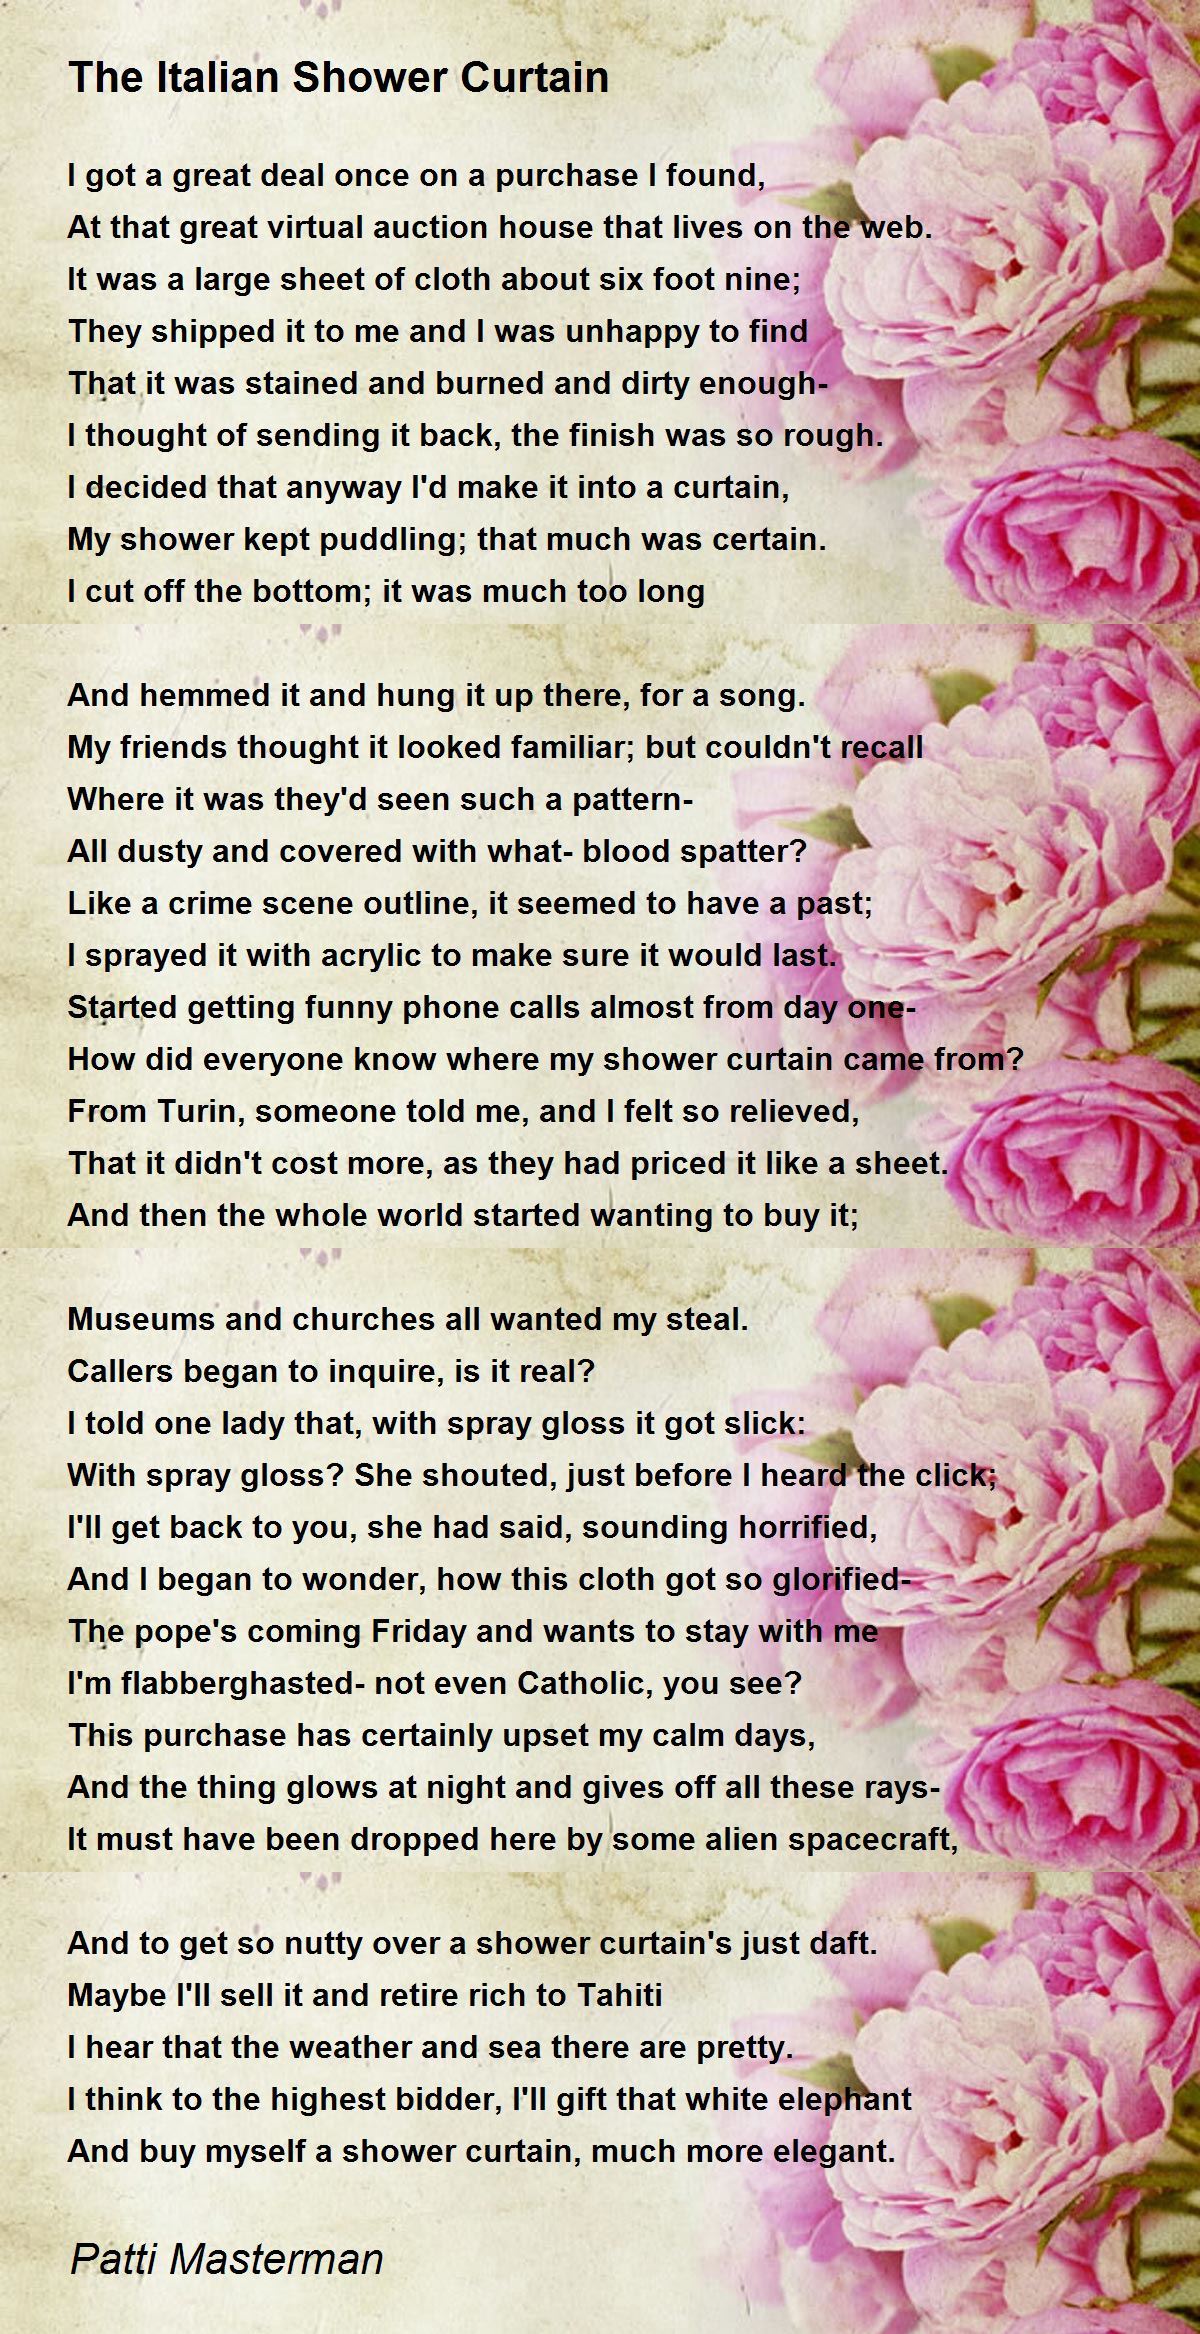 The Italian Shower Curtain - The Italian Shower Curtain Poem by Patti ...